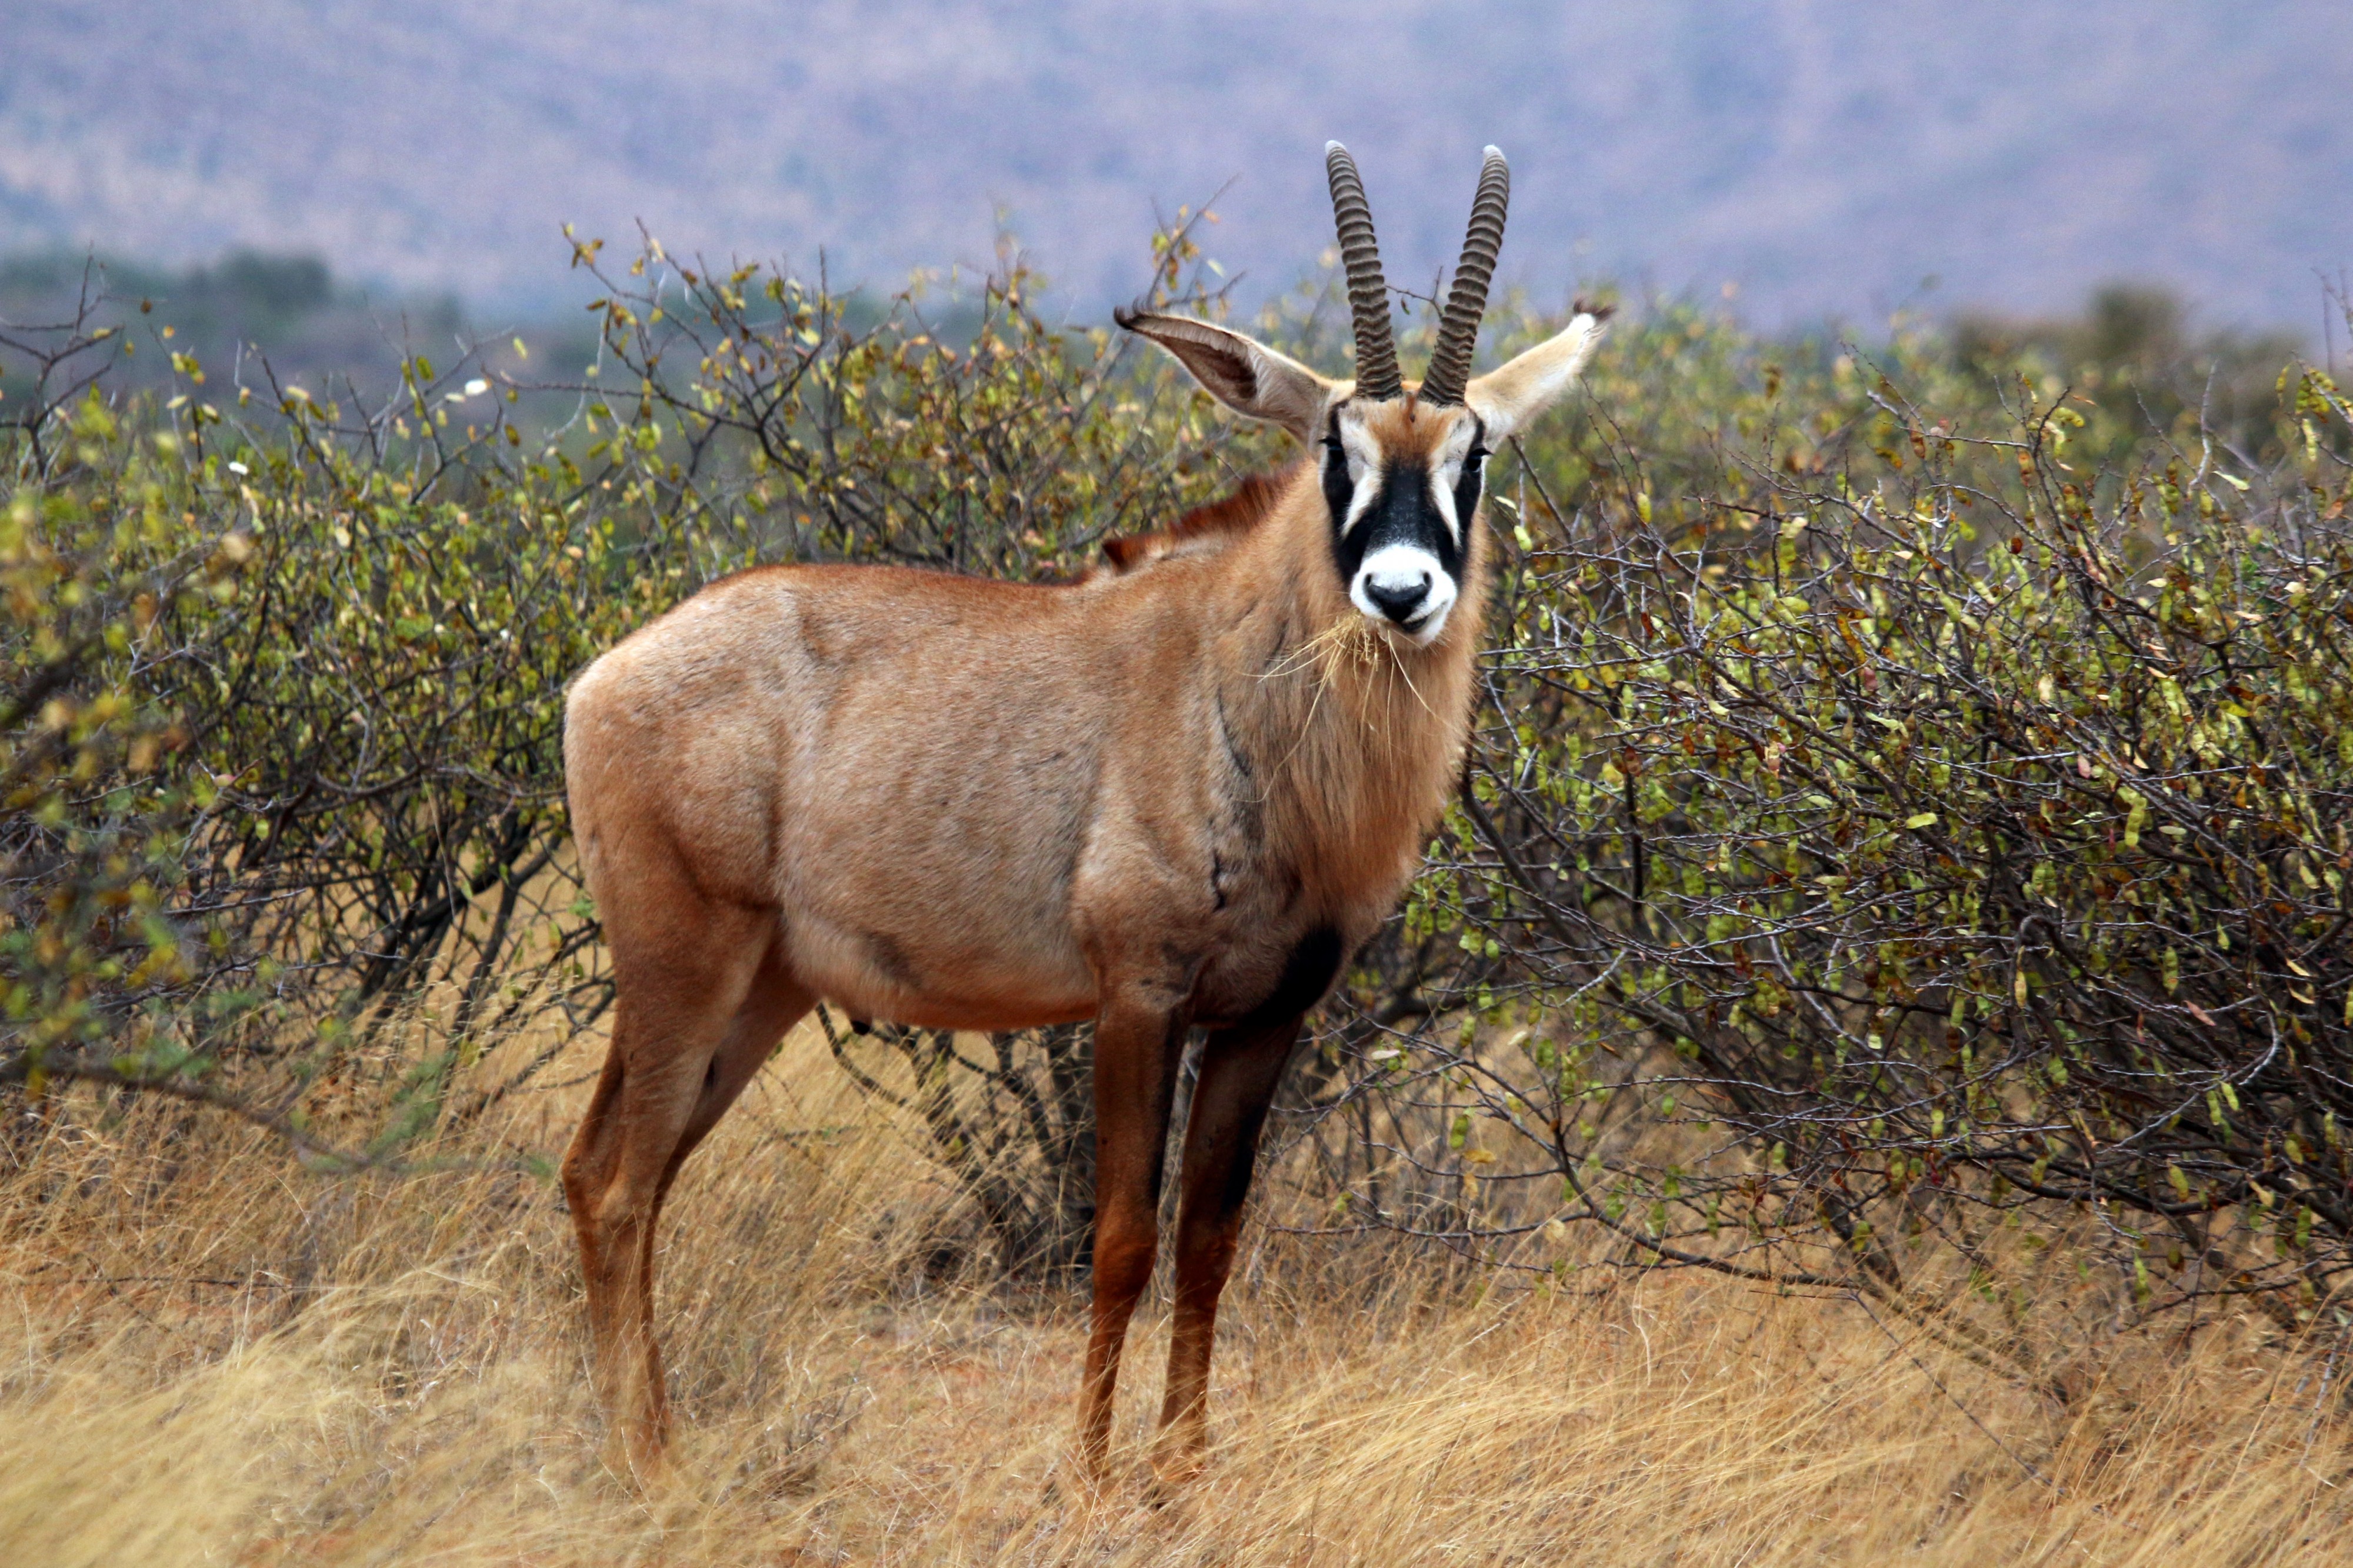 Roan antelope (Hippotragus equinus) male